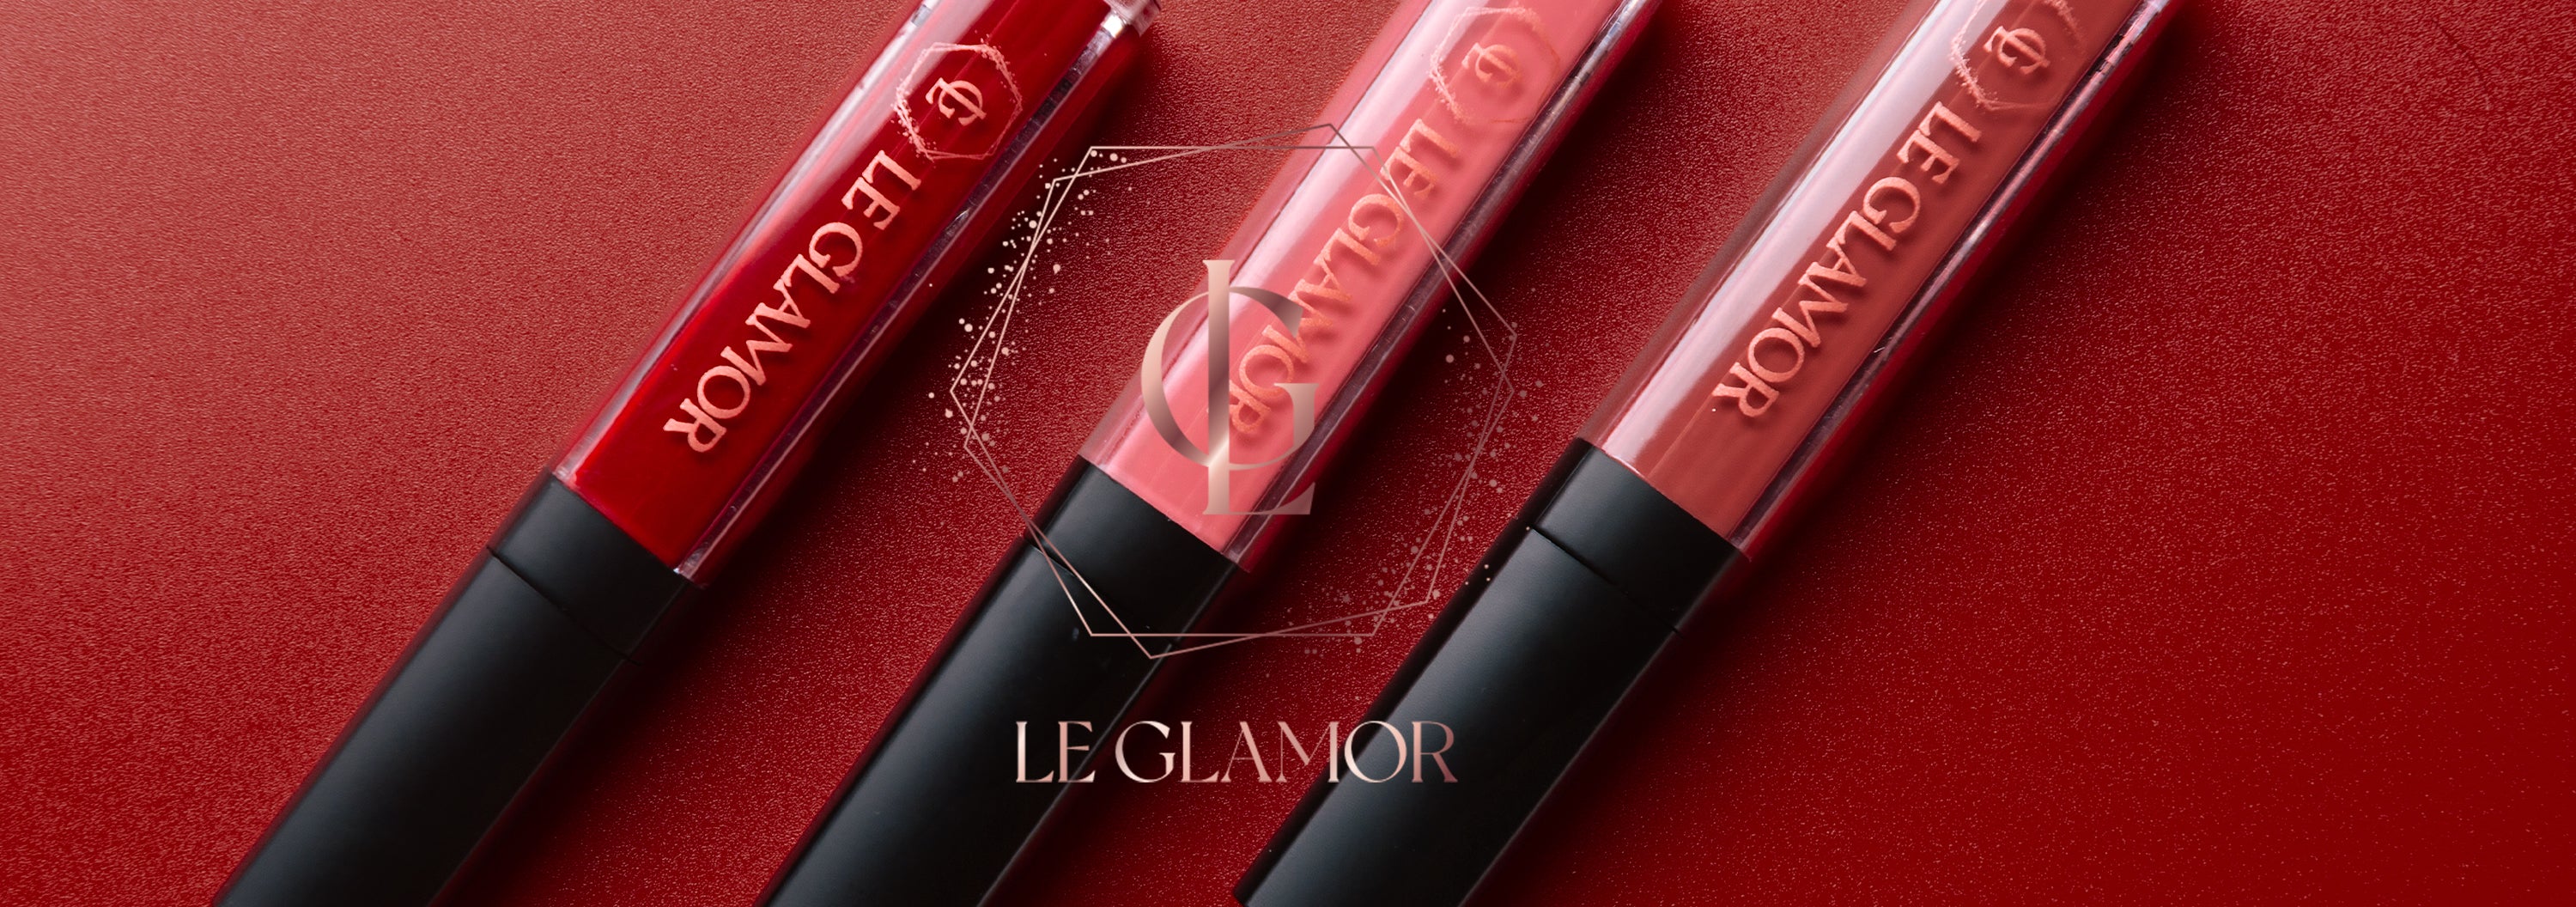 Le Glamor Cosmetics Limited